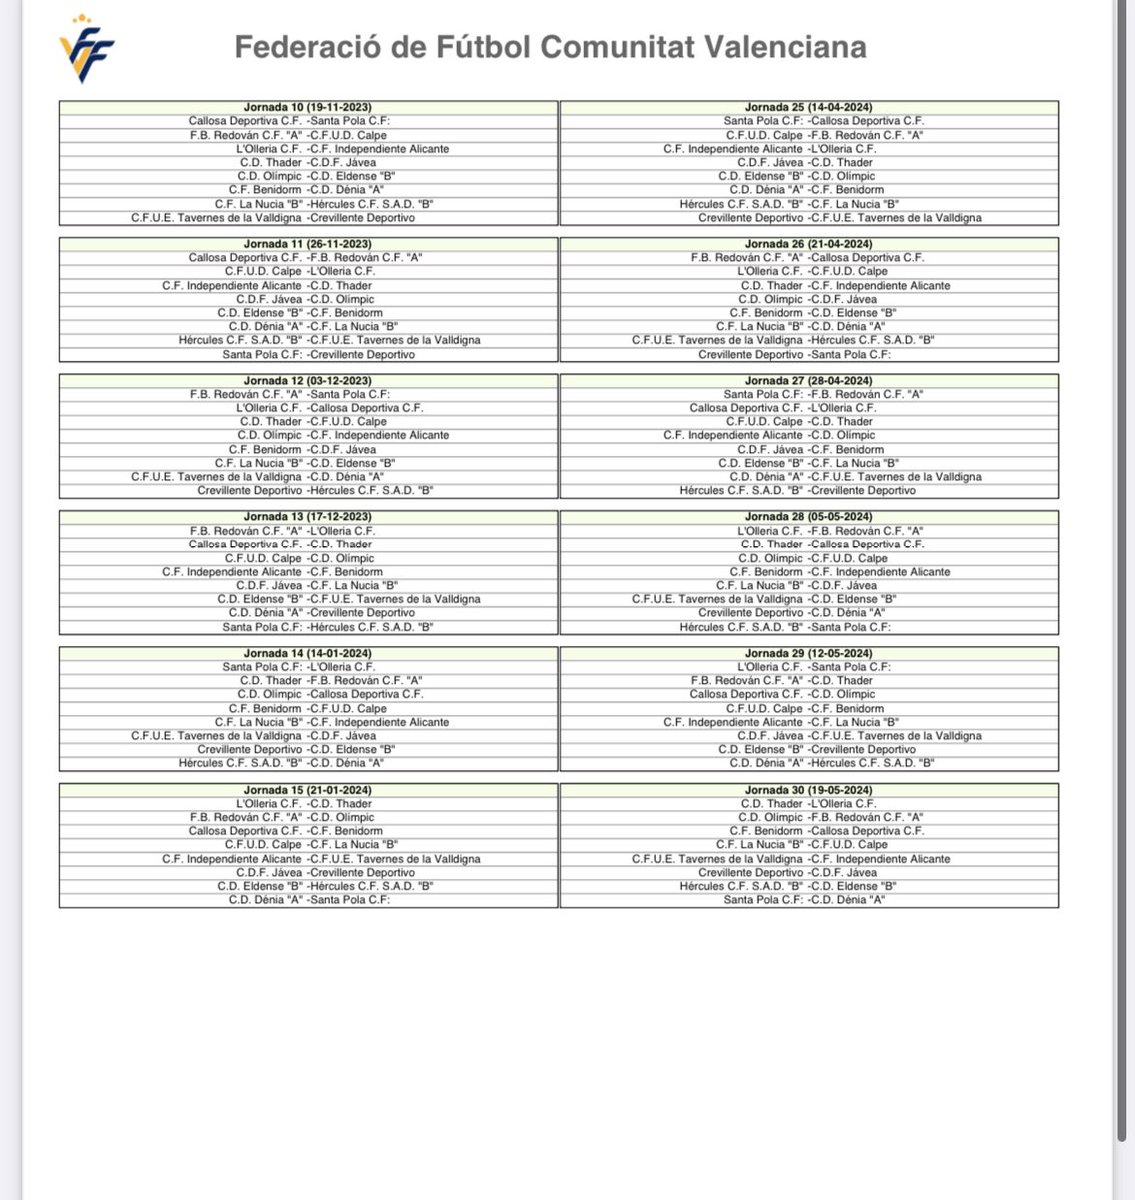 CALENDARIO OFICIAL✅

🏆Lliga Comunitat SUR 23/24

#ffcv #futbolvalenciano #lligacomunitat #lligacomunitatsur #lligacomunitatsud